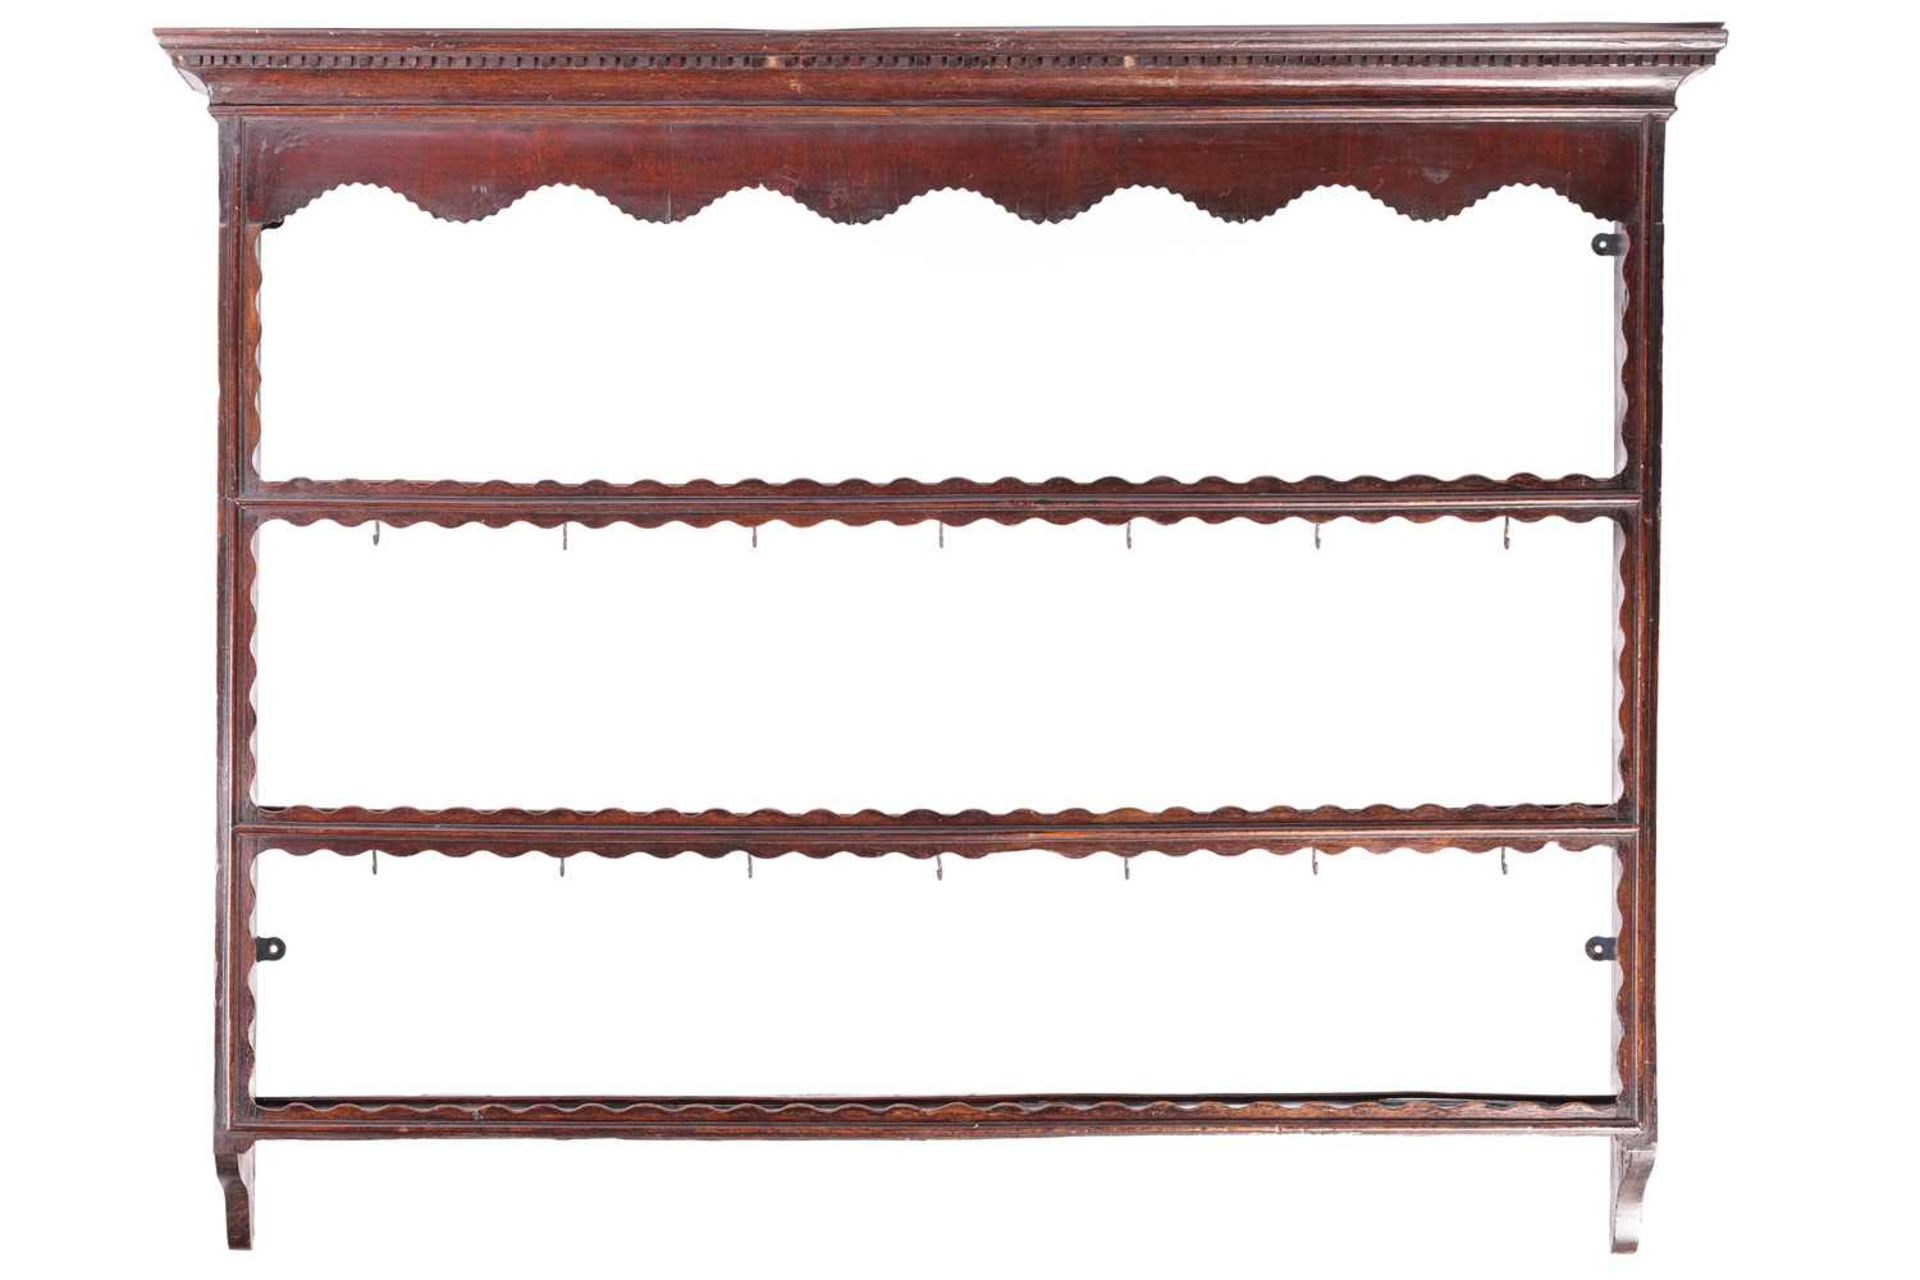 An 18th-century oak three-tier Delft rack with dental cornice, 104 cm high, 132 cm wide, 15.5 cm